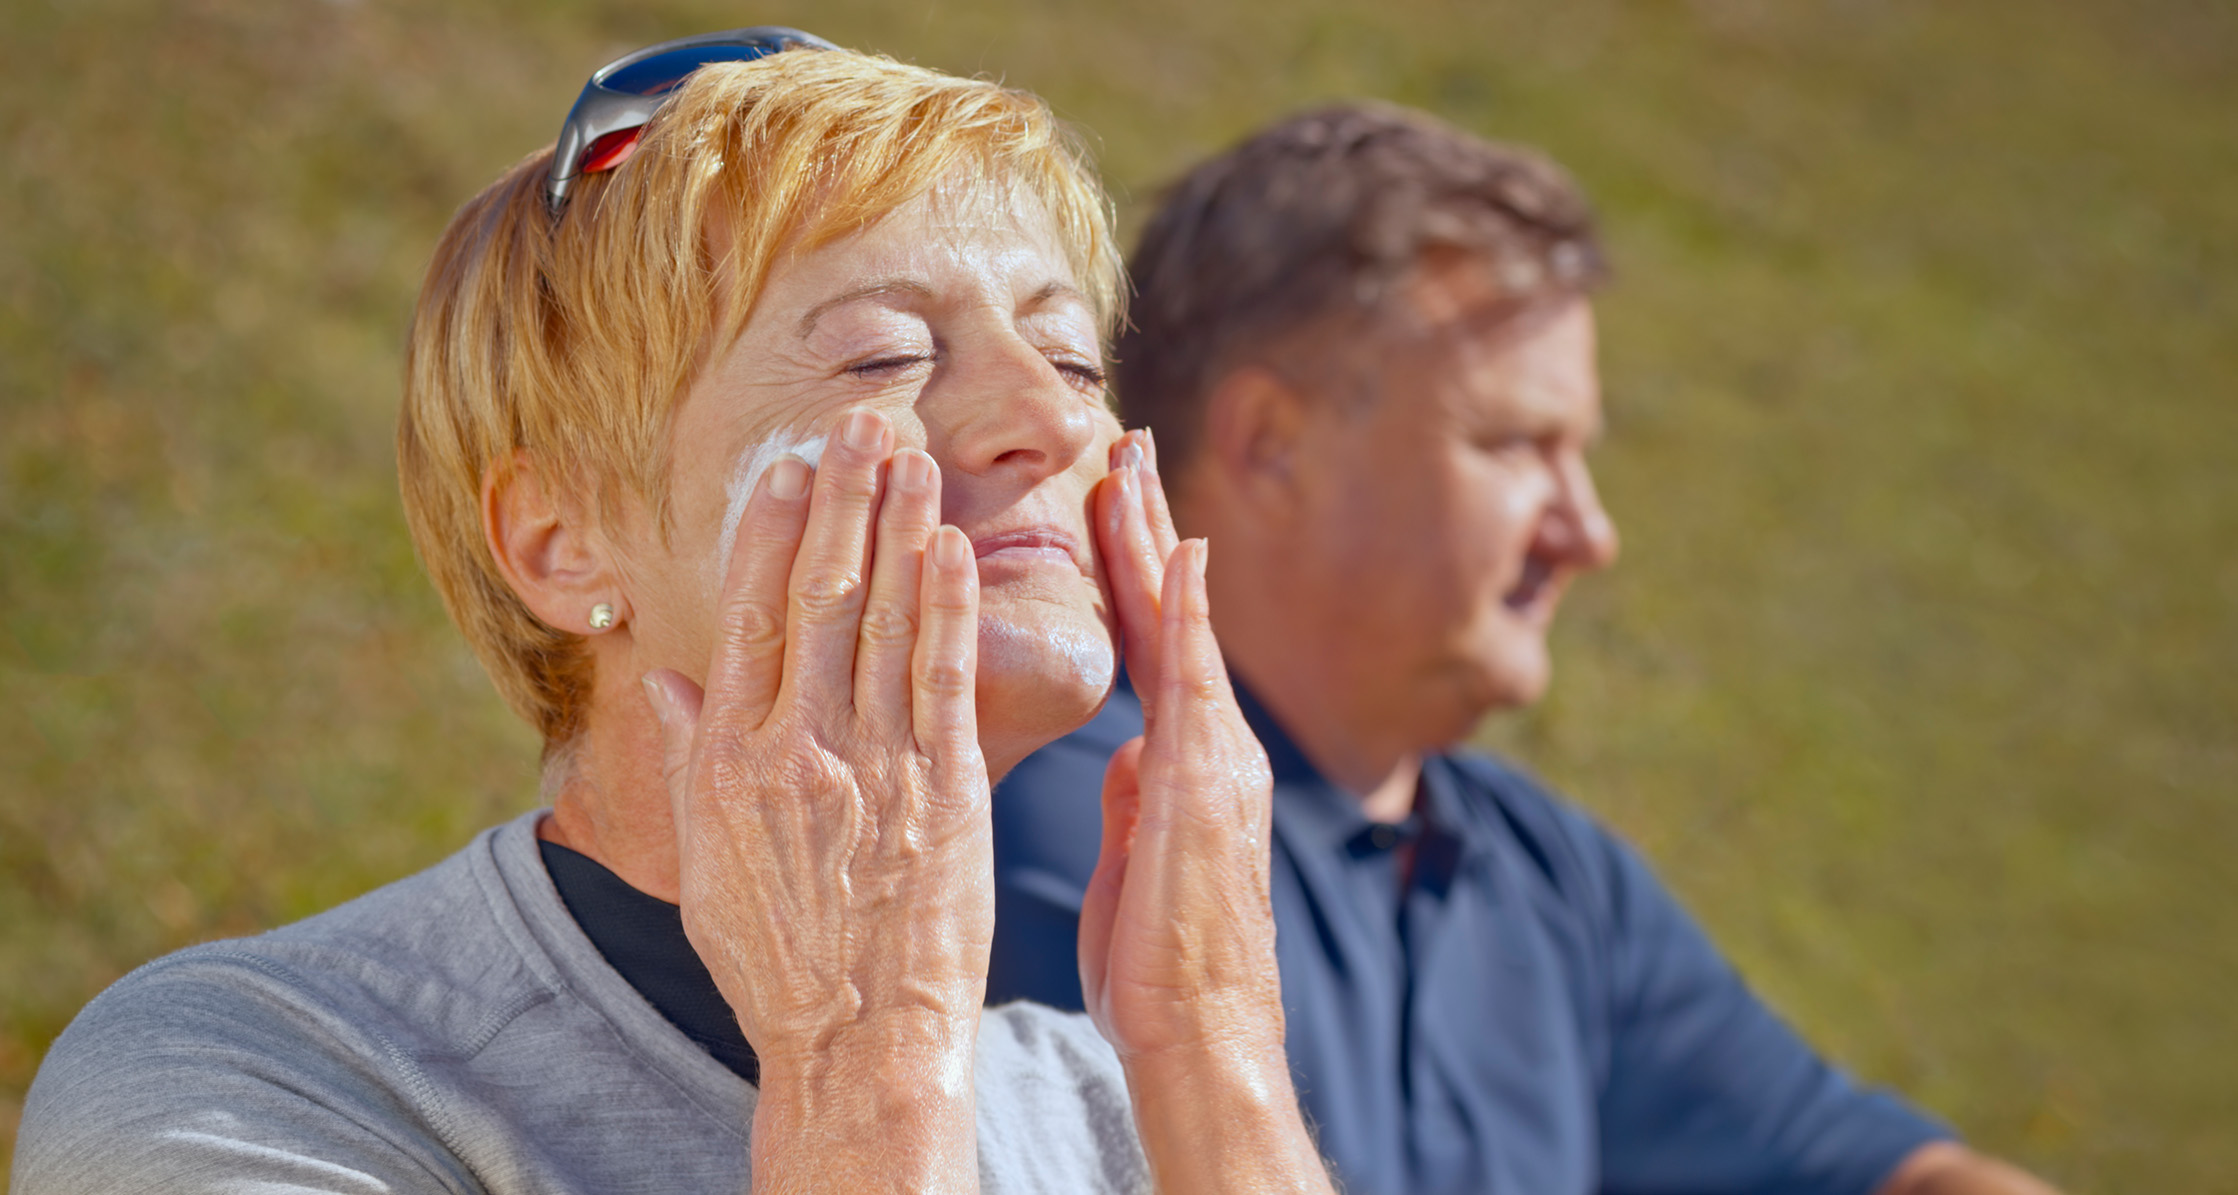 Woman applying sunscreen.